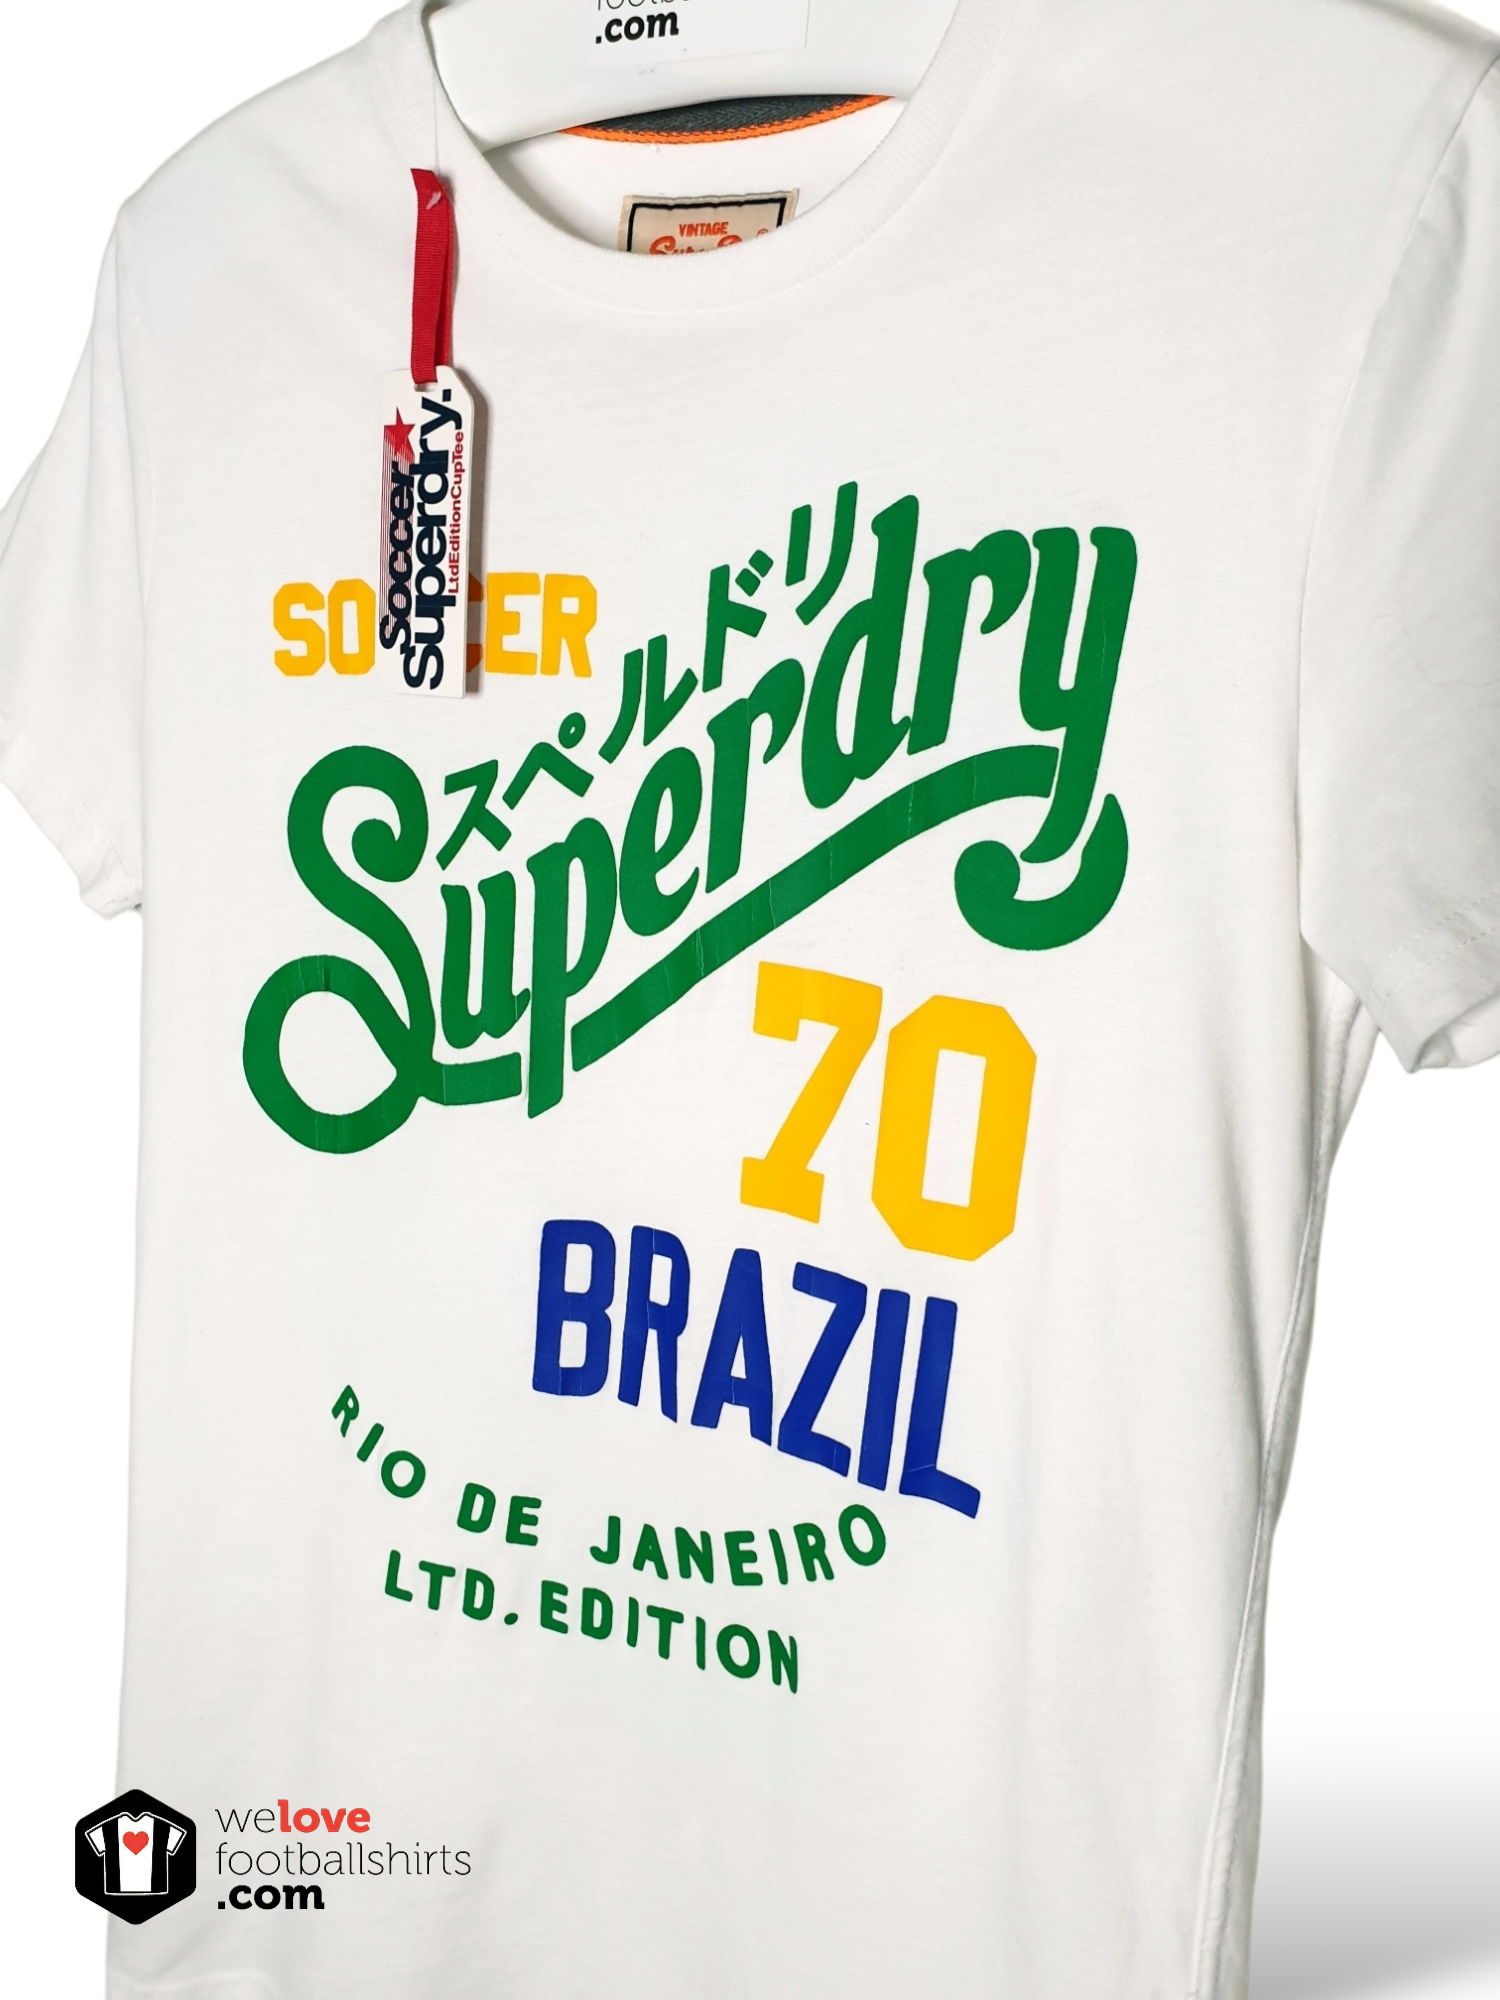 Fanwear Original Fanwear cotton football vintage t-shirt Superdry Brasil 70